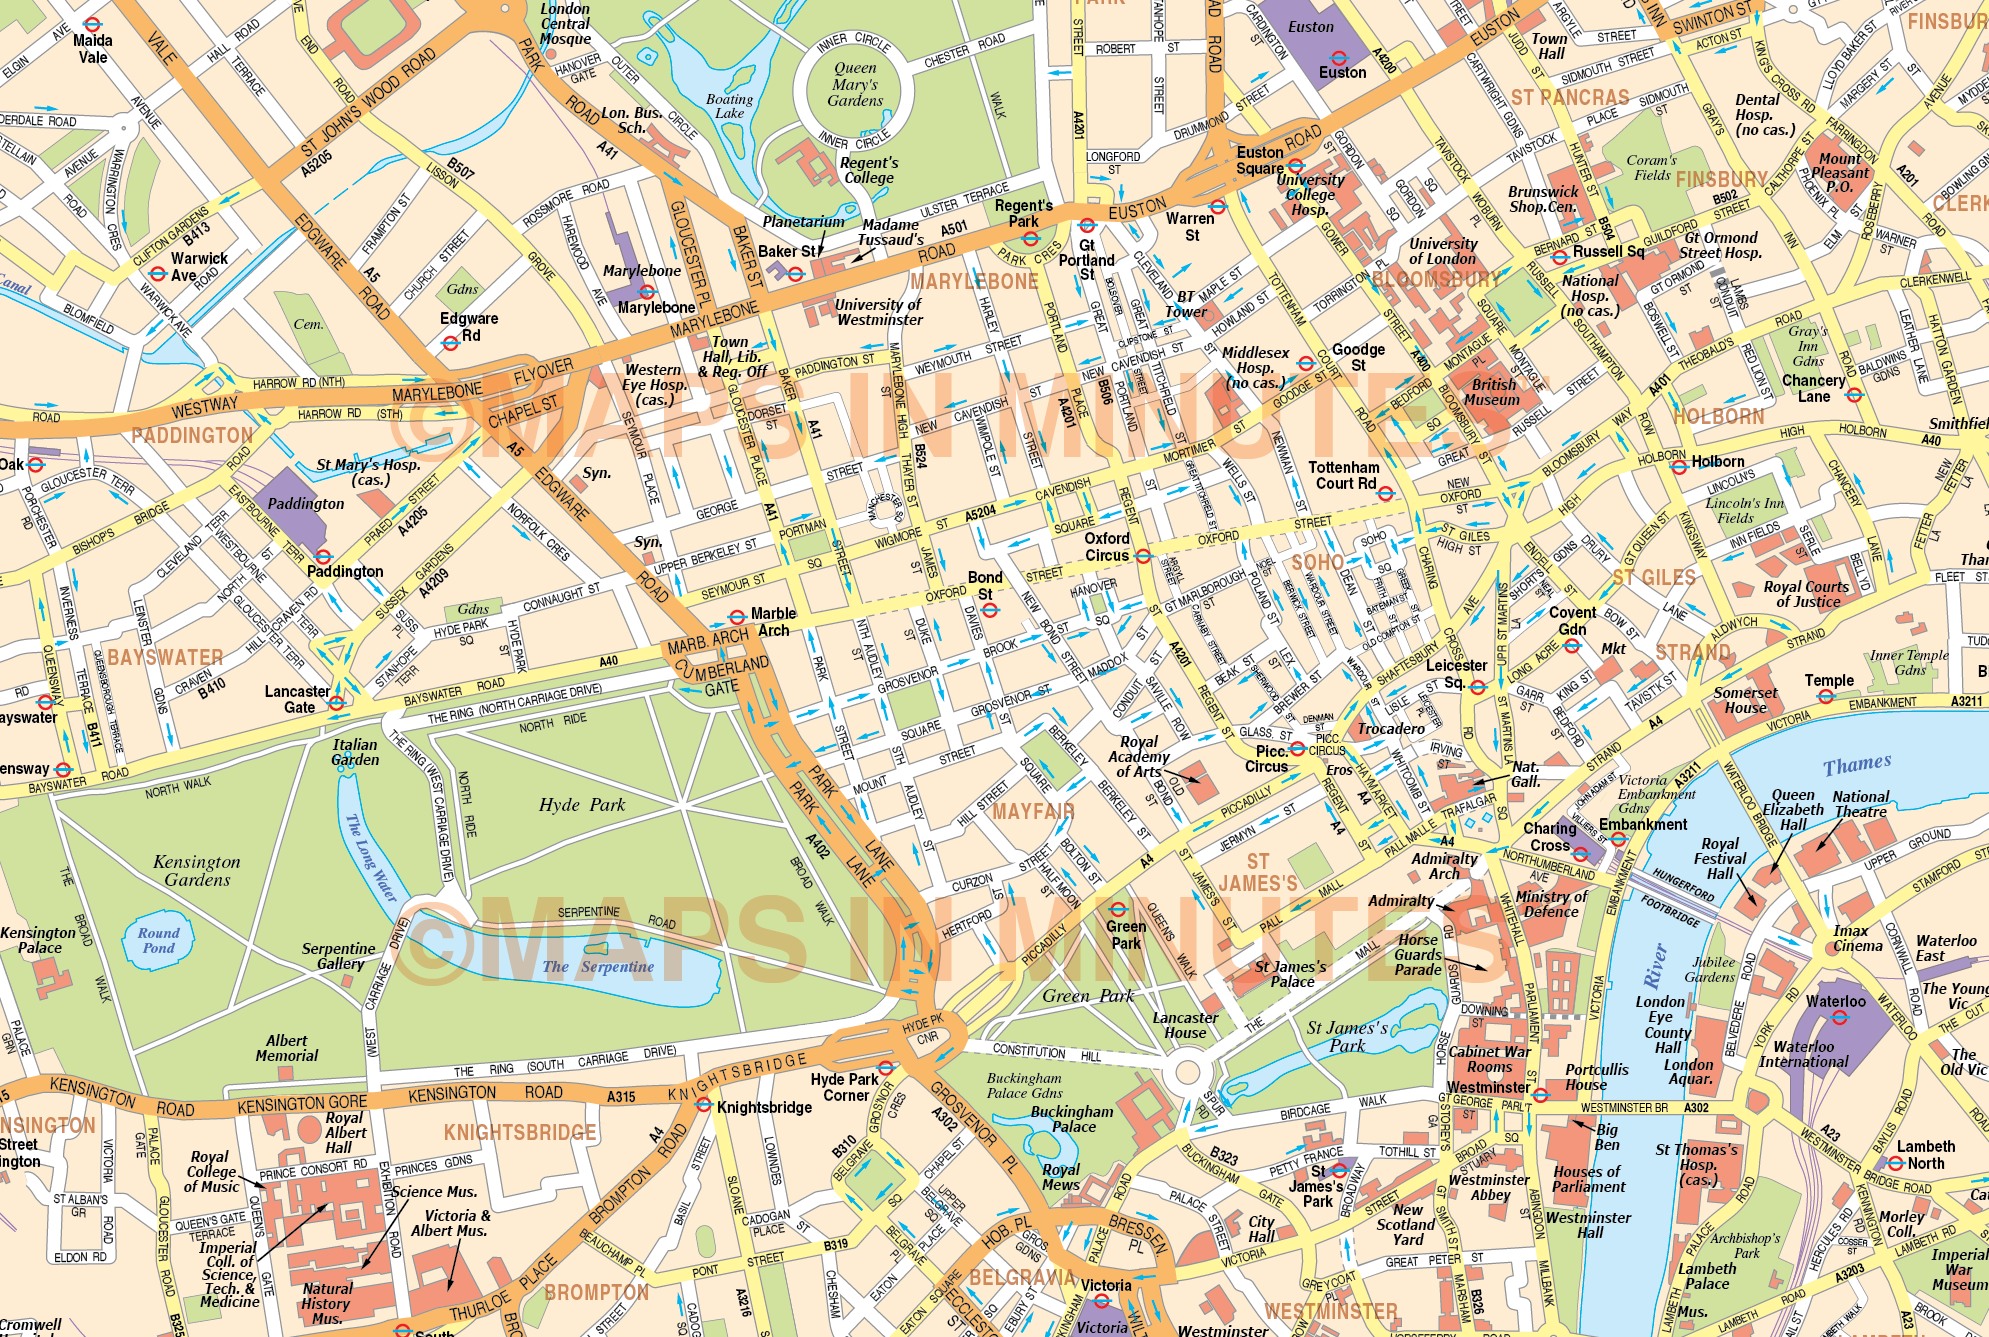 Digital vector map of London in illustrator editable format. Royalty free.